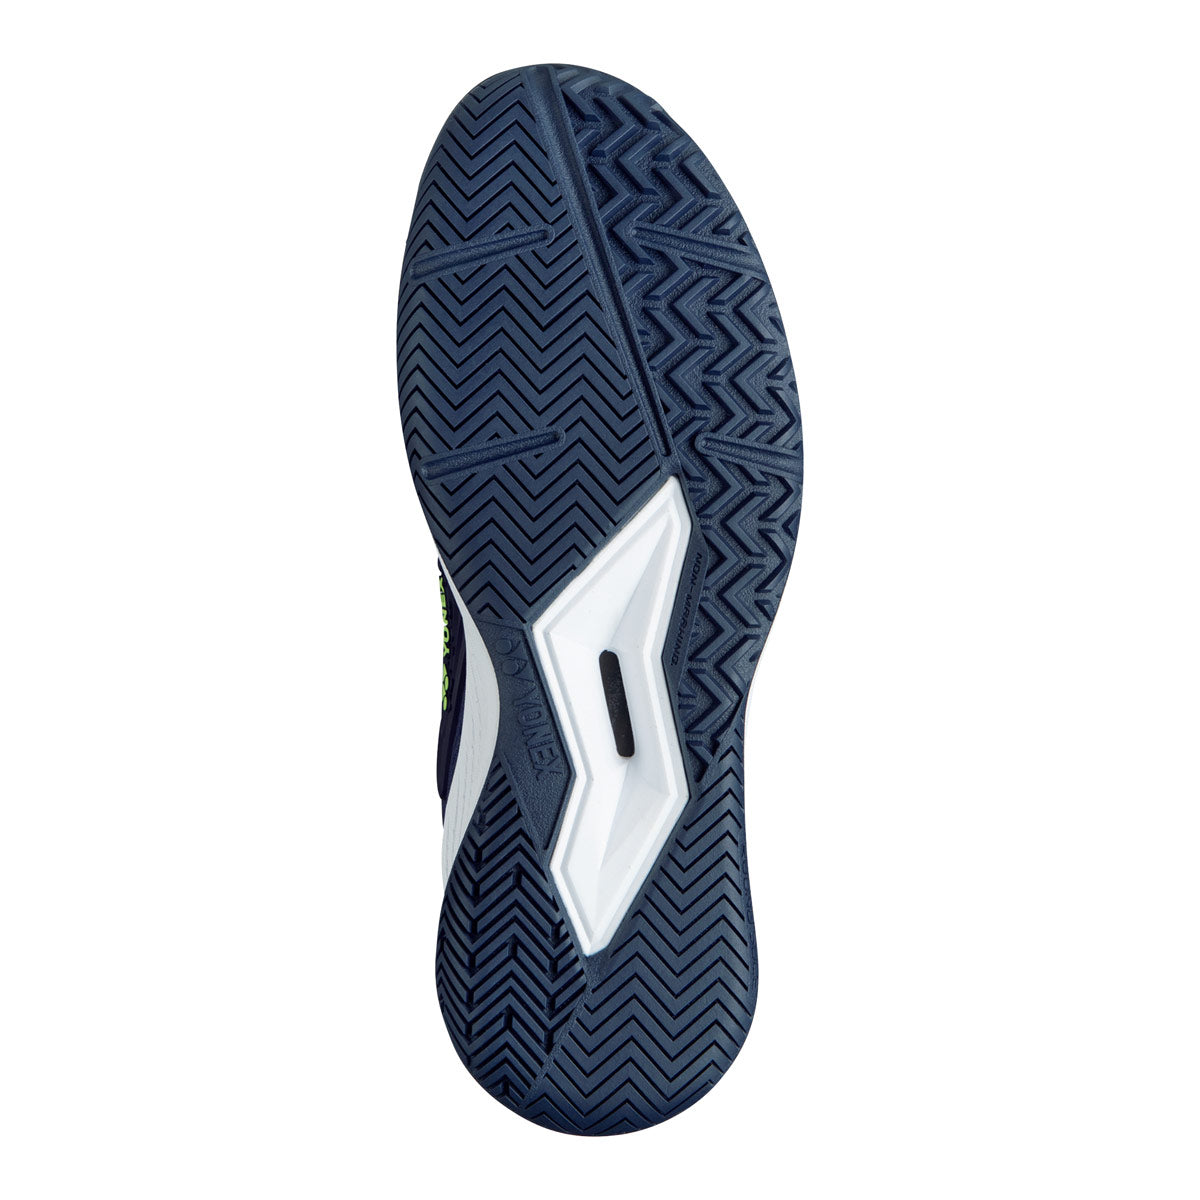 Yonex Eclipsion 4 Tennis Shoes Mens (Navy Blue)